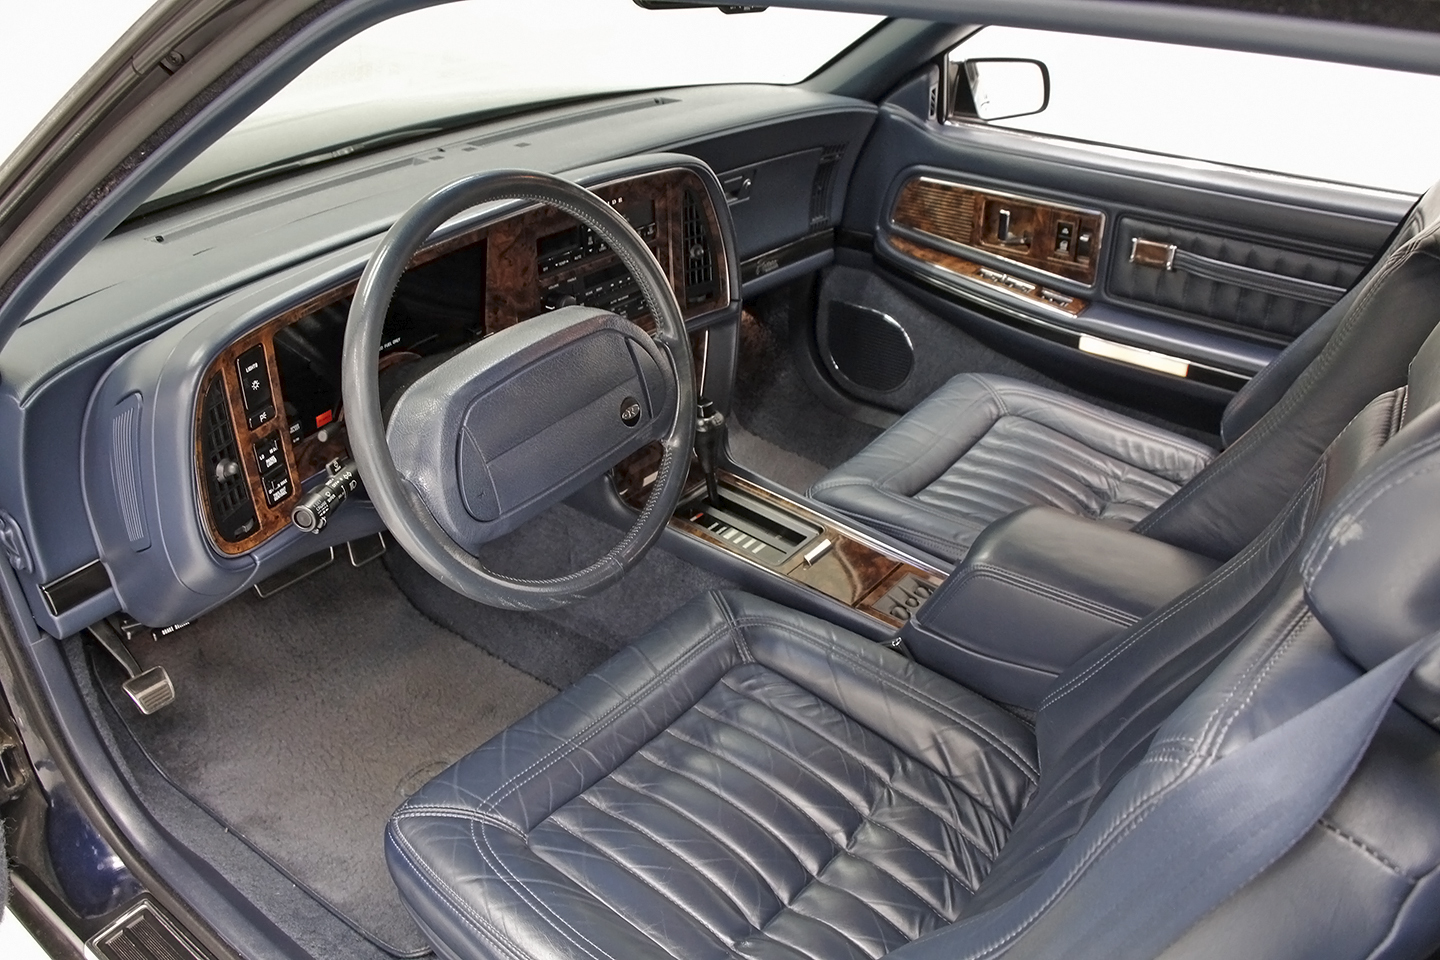 1991 Buick Riviera